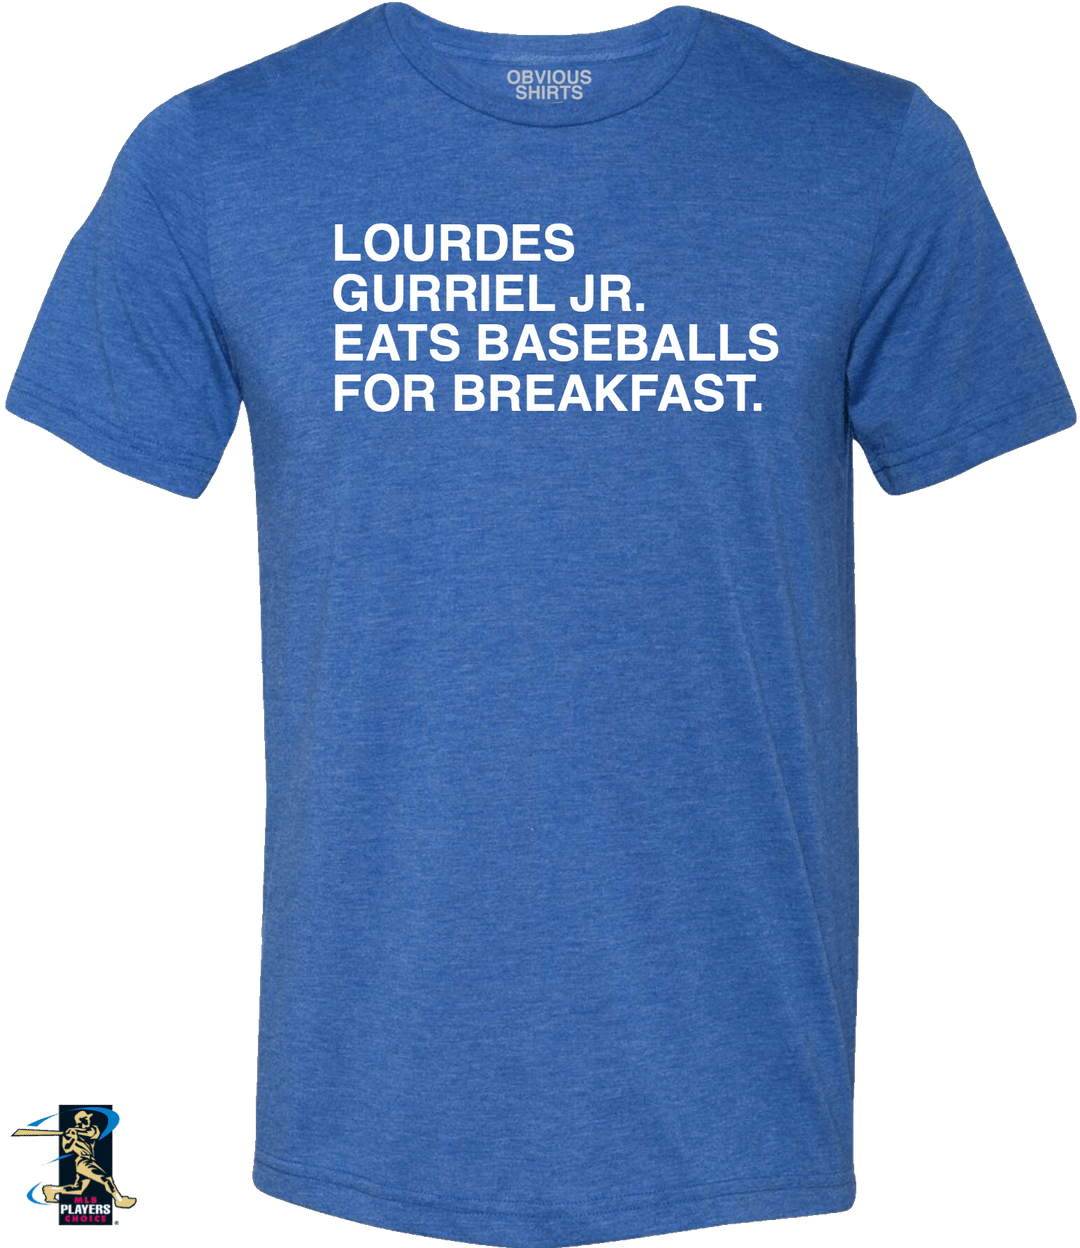 LOURDES GURRIEL JR. EATS BASEBALLS FOR BREAKFAST. - OBVIOUS SHIRTS.